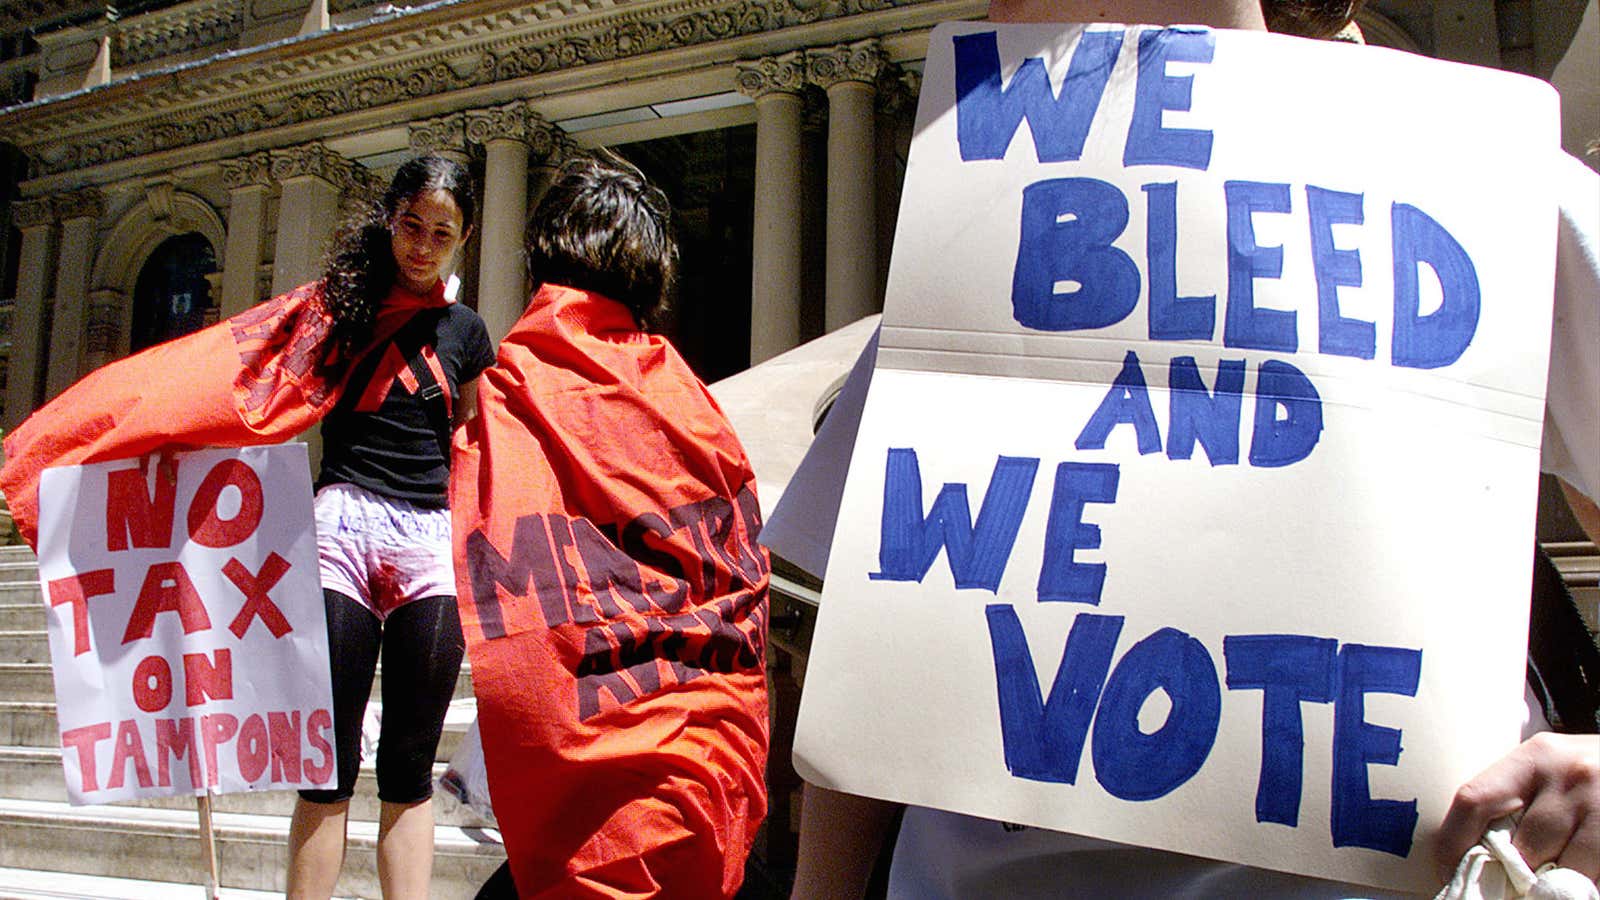 “We bleed and we vote!”